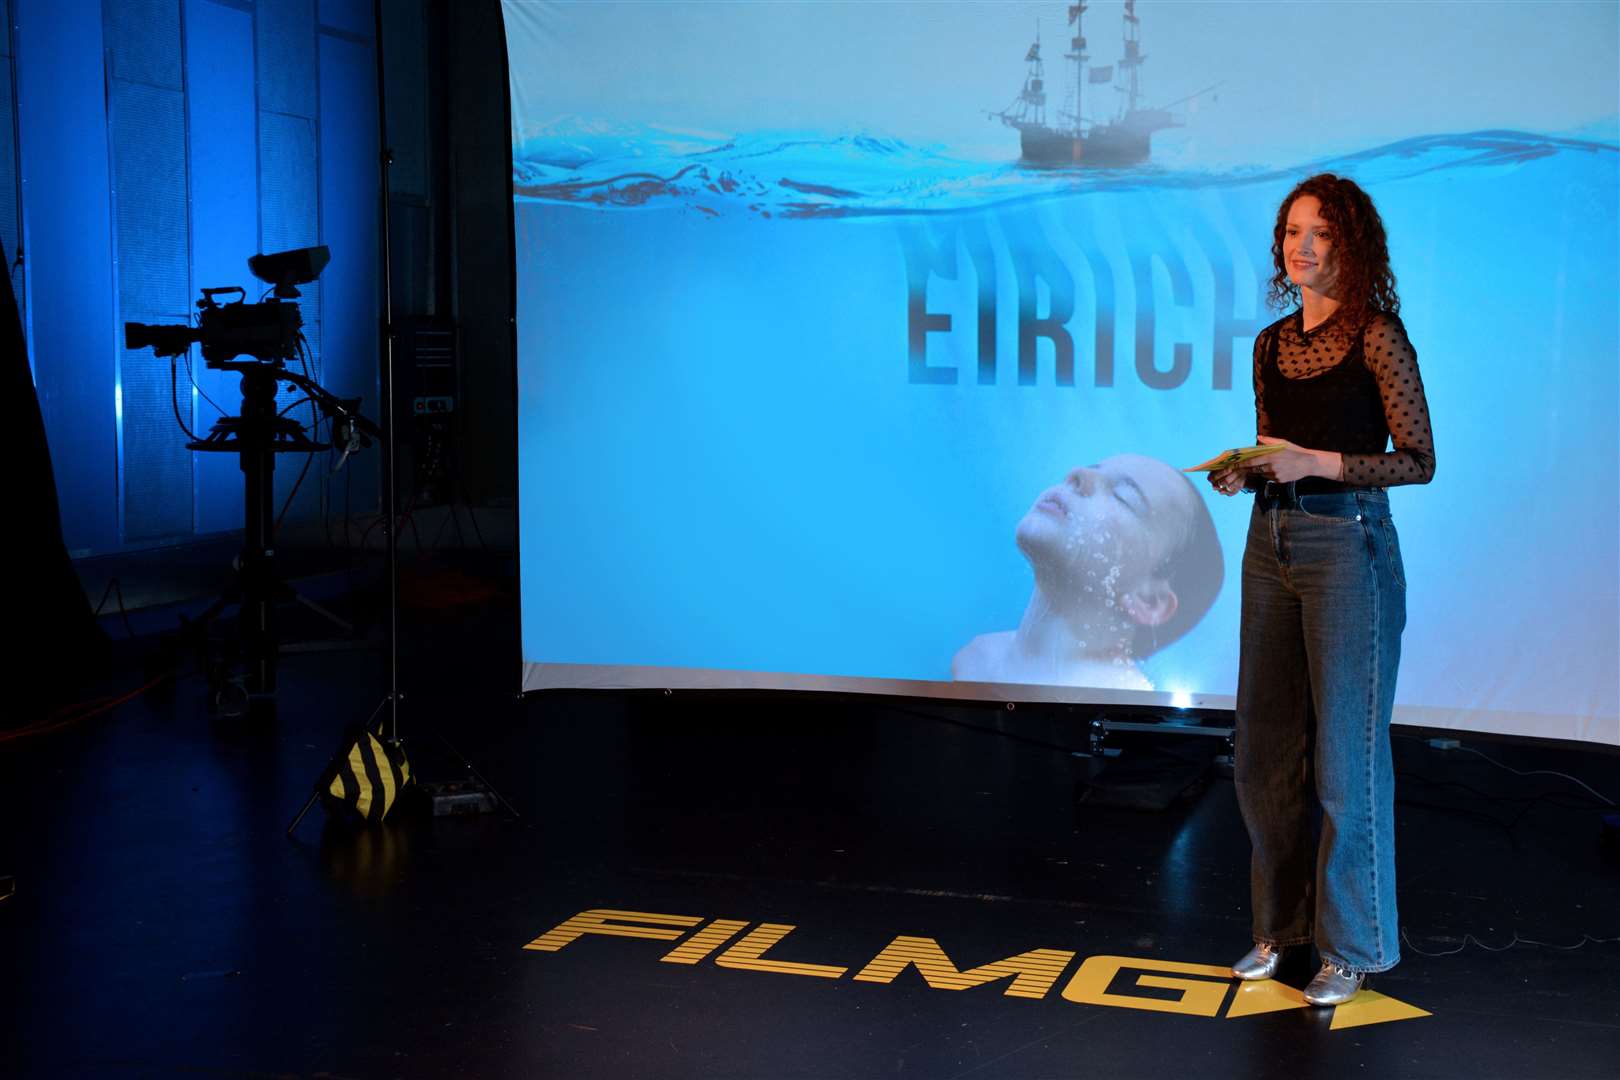 BBC Alba presenter Shona Masson unveiling FilmG's theme artwork for this year.